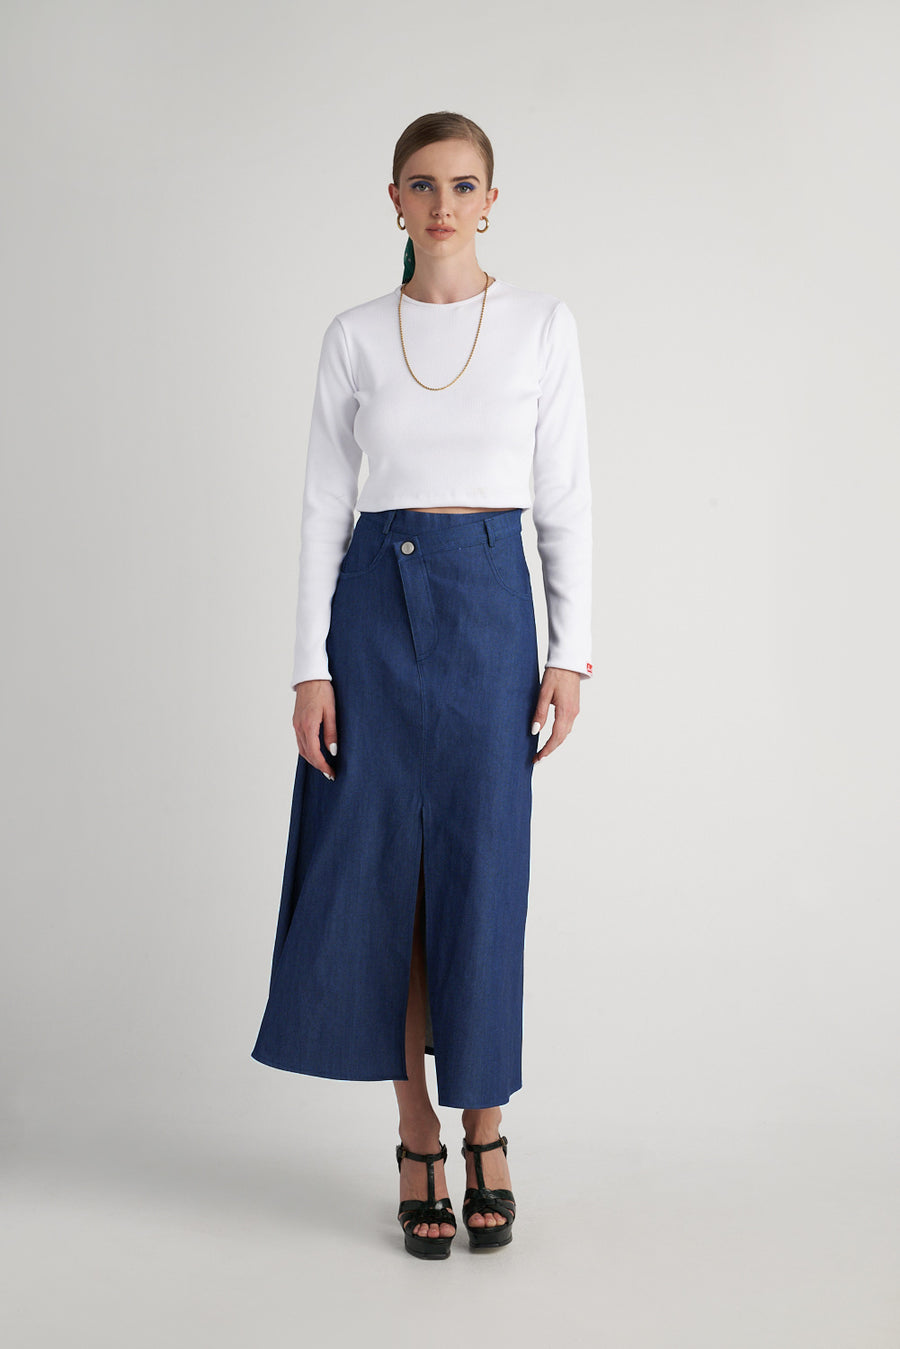 Mya Skirt (Blue Denim)